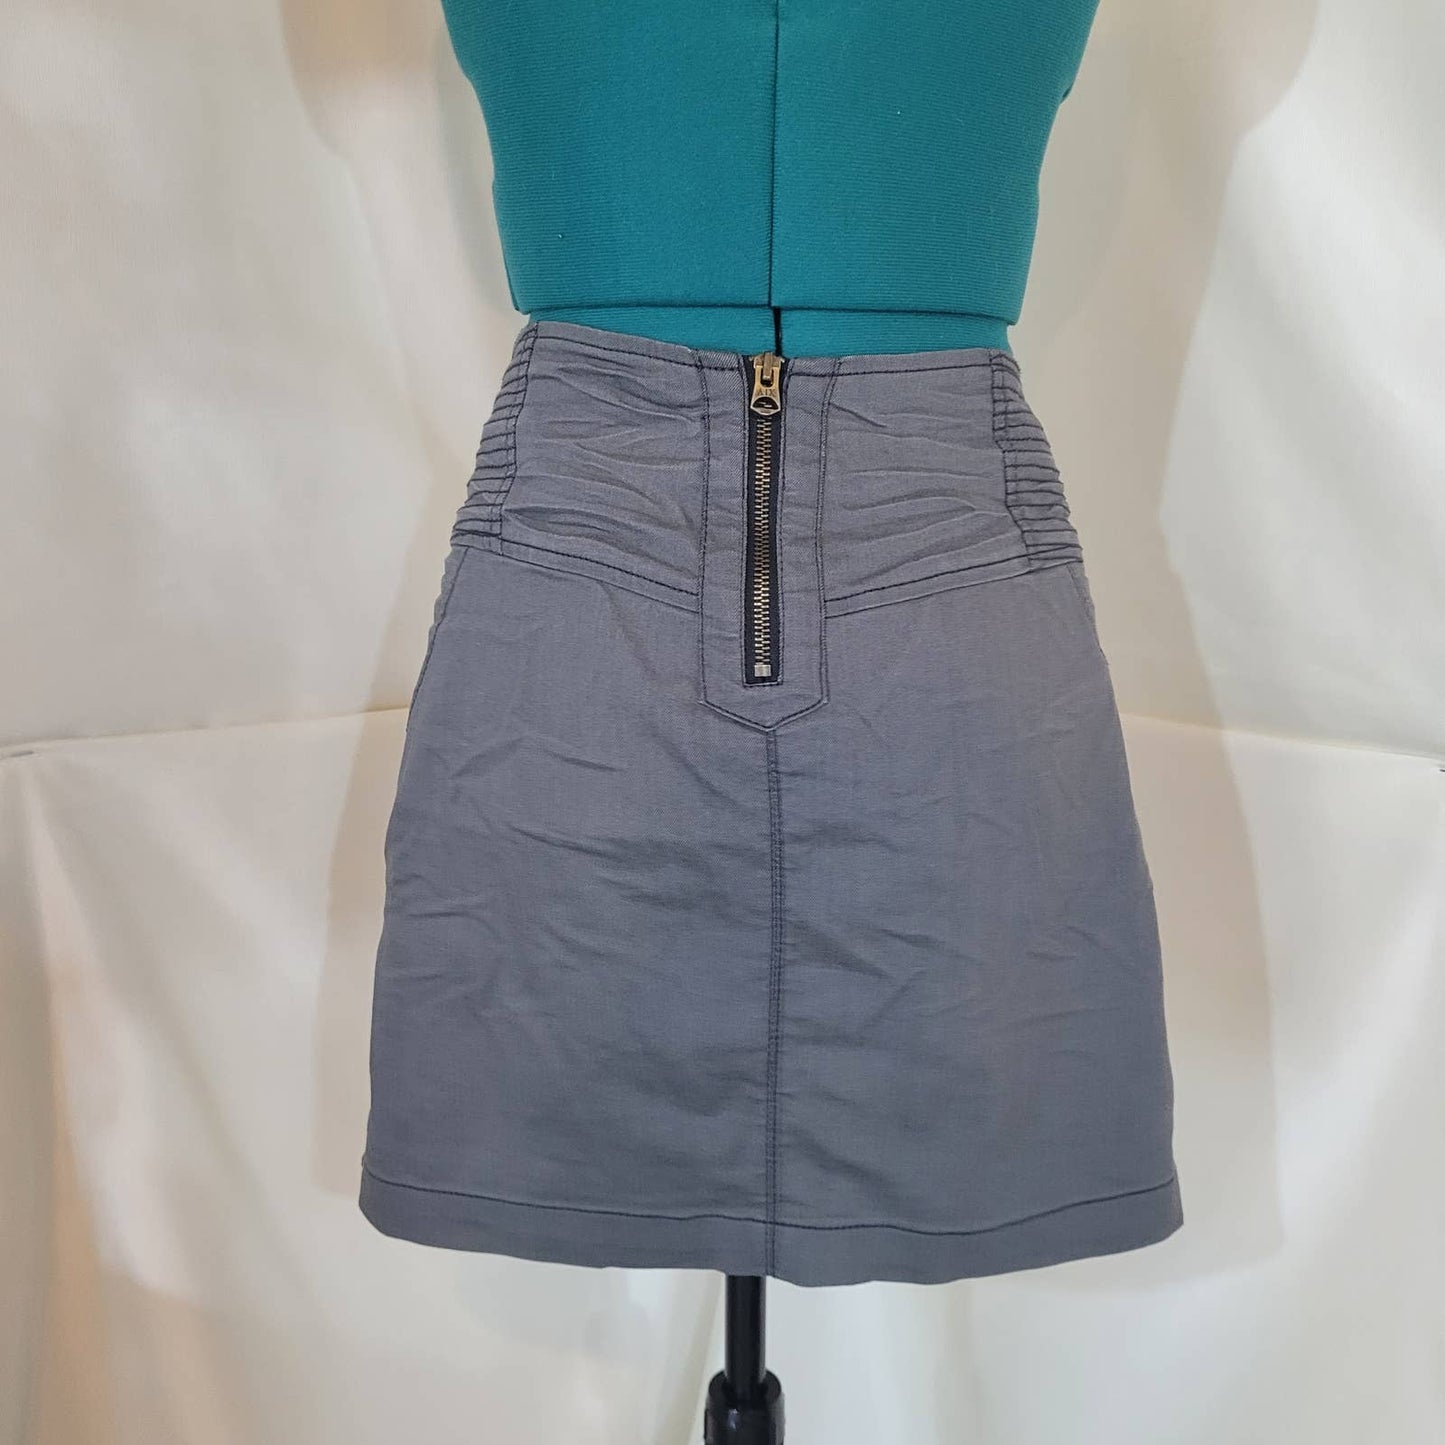 Armani Exchange Gray Mini Skirt with Decorative Zippers - Size 6